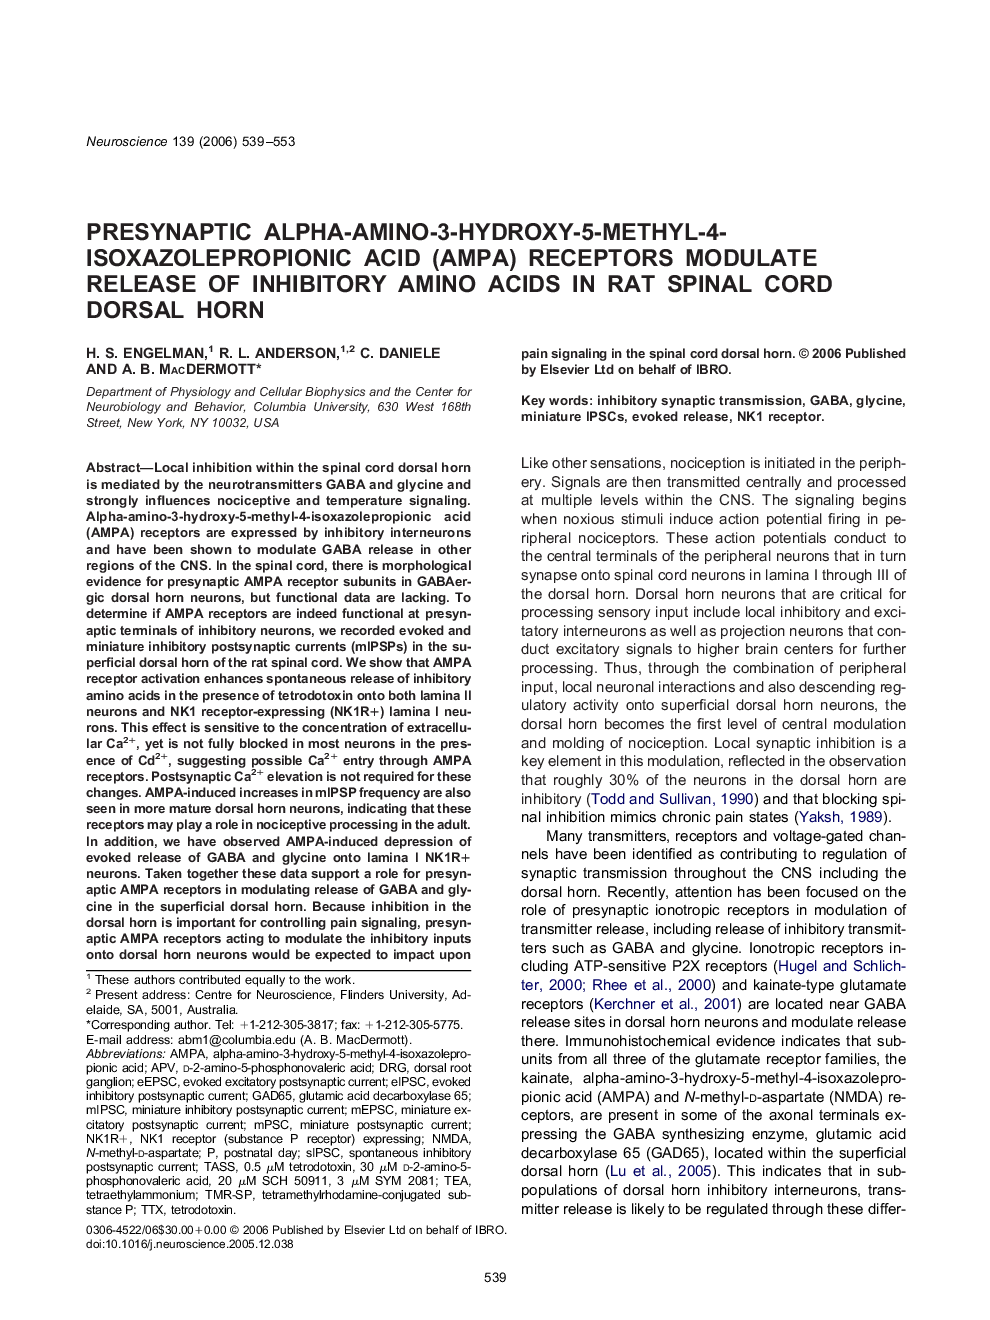 Presynaptic alpha-amino-3-hydroxy-5-methyl-4-isoxazolepropionic acid (AMPA) receptors modulate release of inhibitory amino acids in rat spinal cord dorsal horn